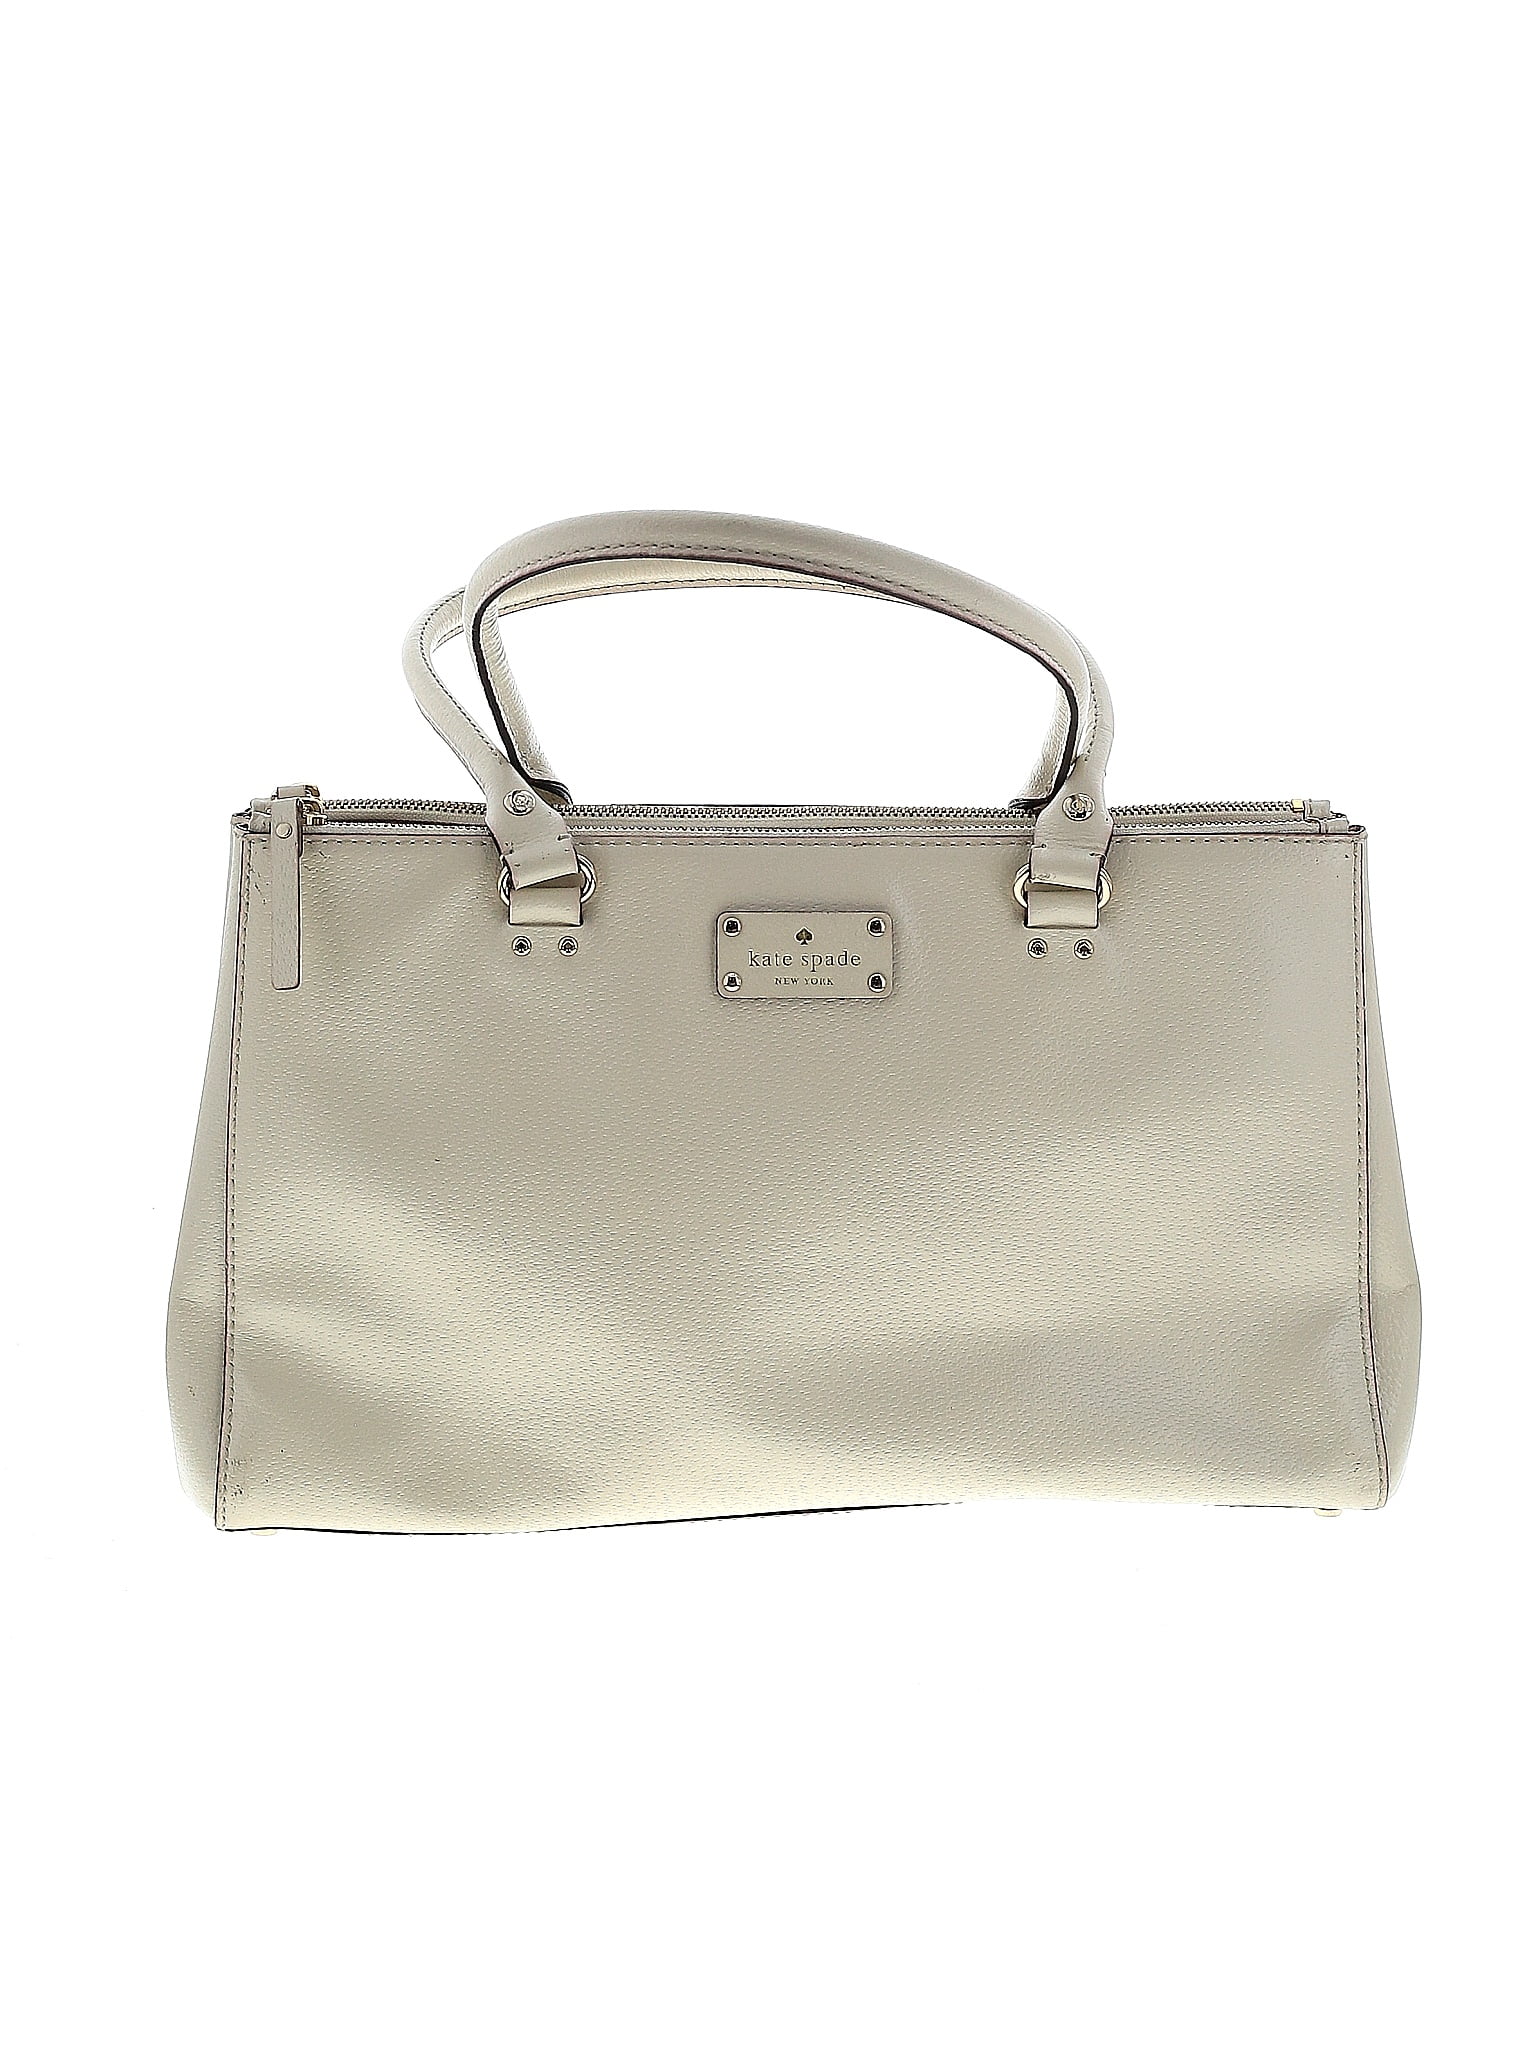 Kate Spade New York 100% Leather Solid Gray Ivory Leather Shoulder Bag ...